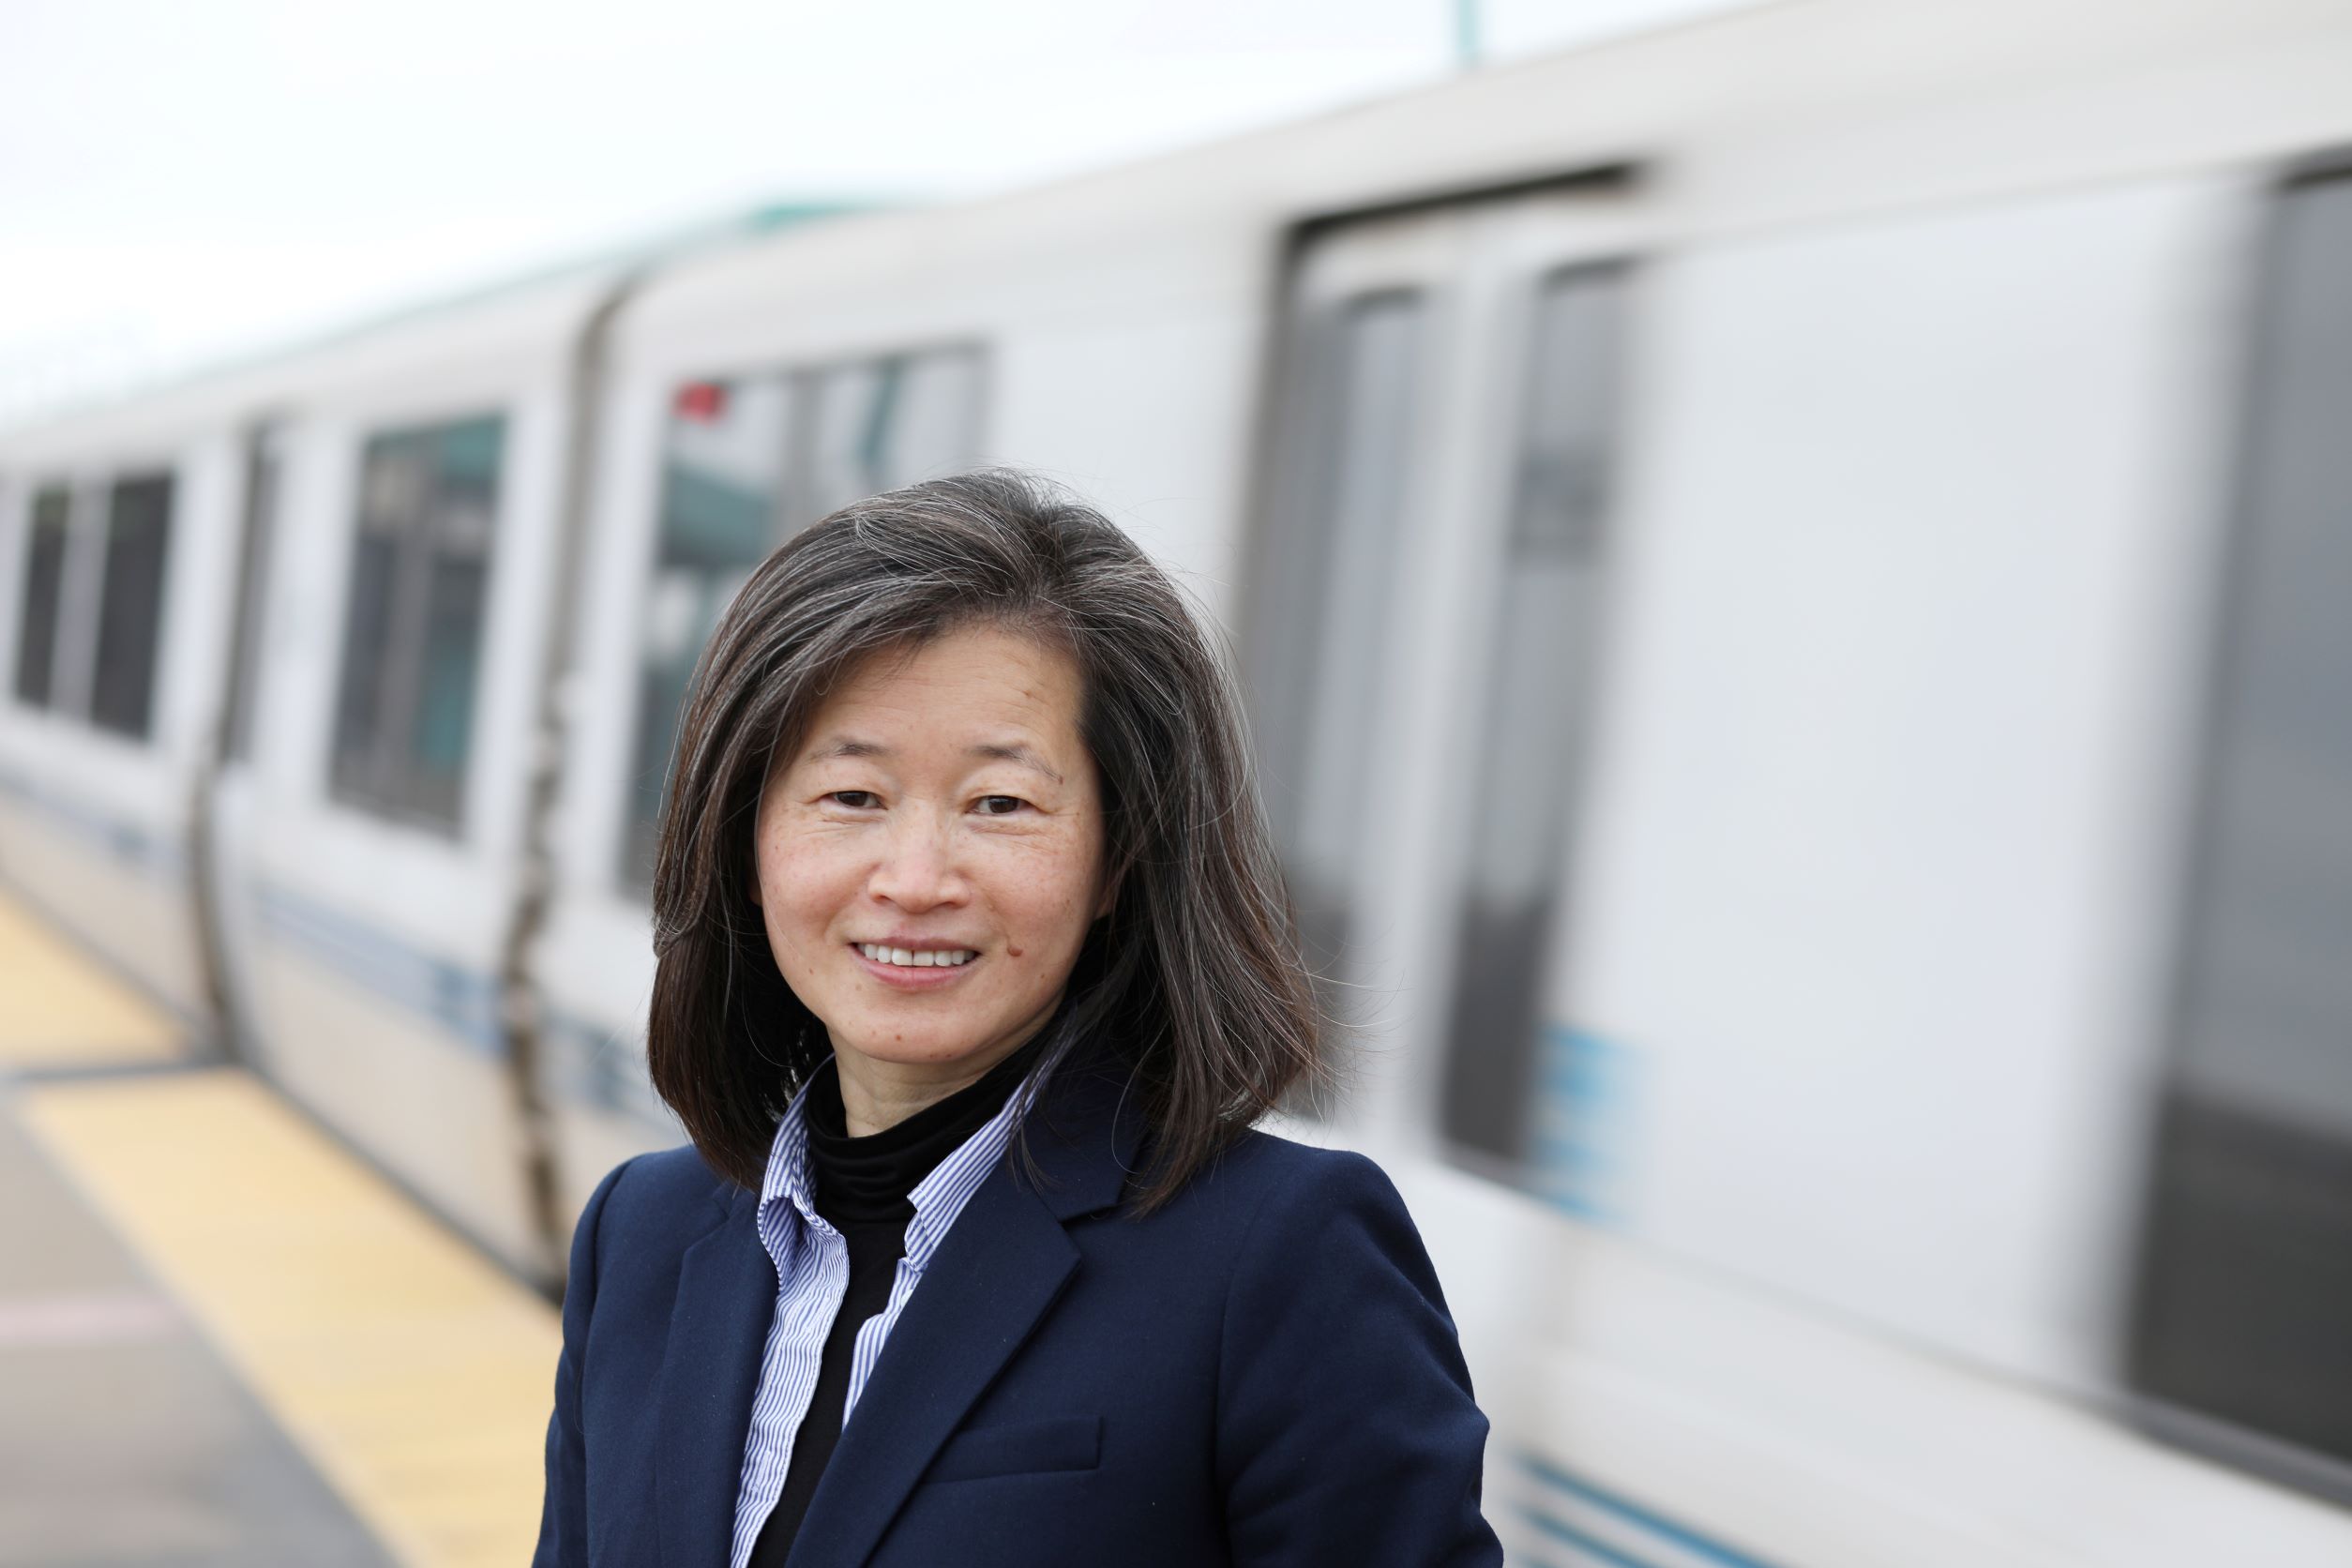 Photo of Phoebe Cheng at West Oakland station